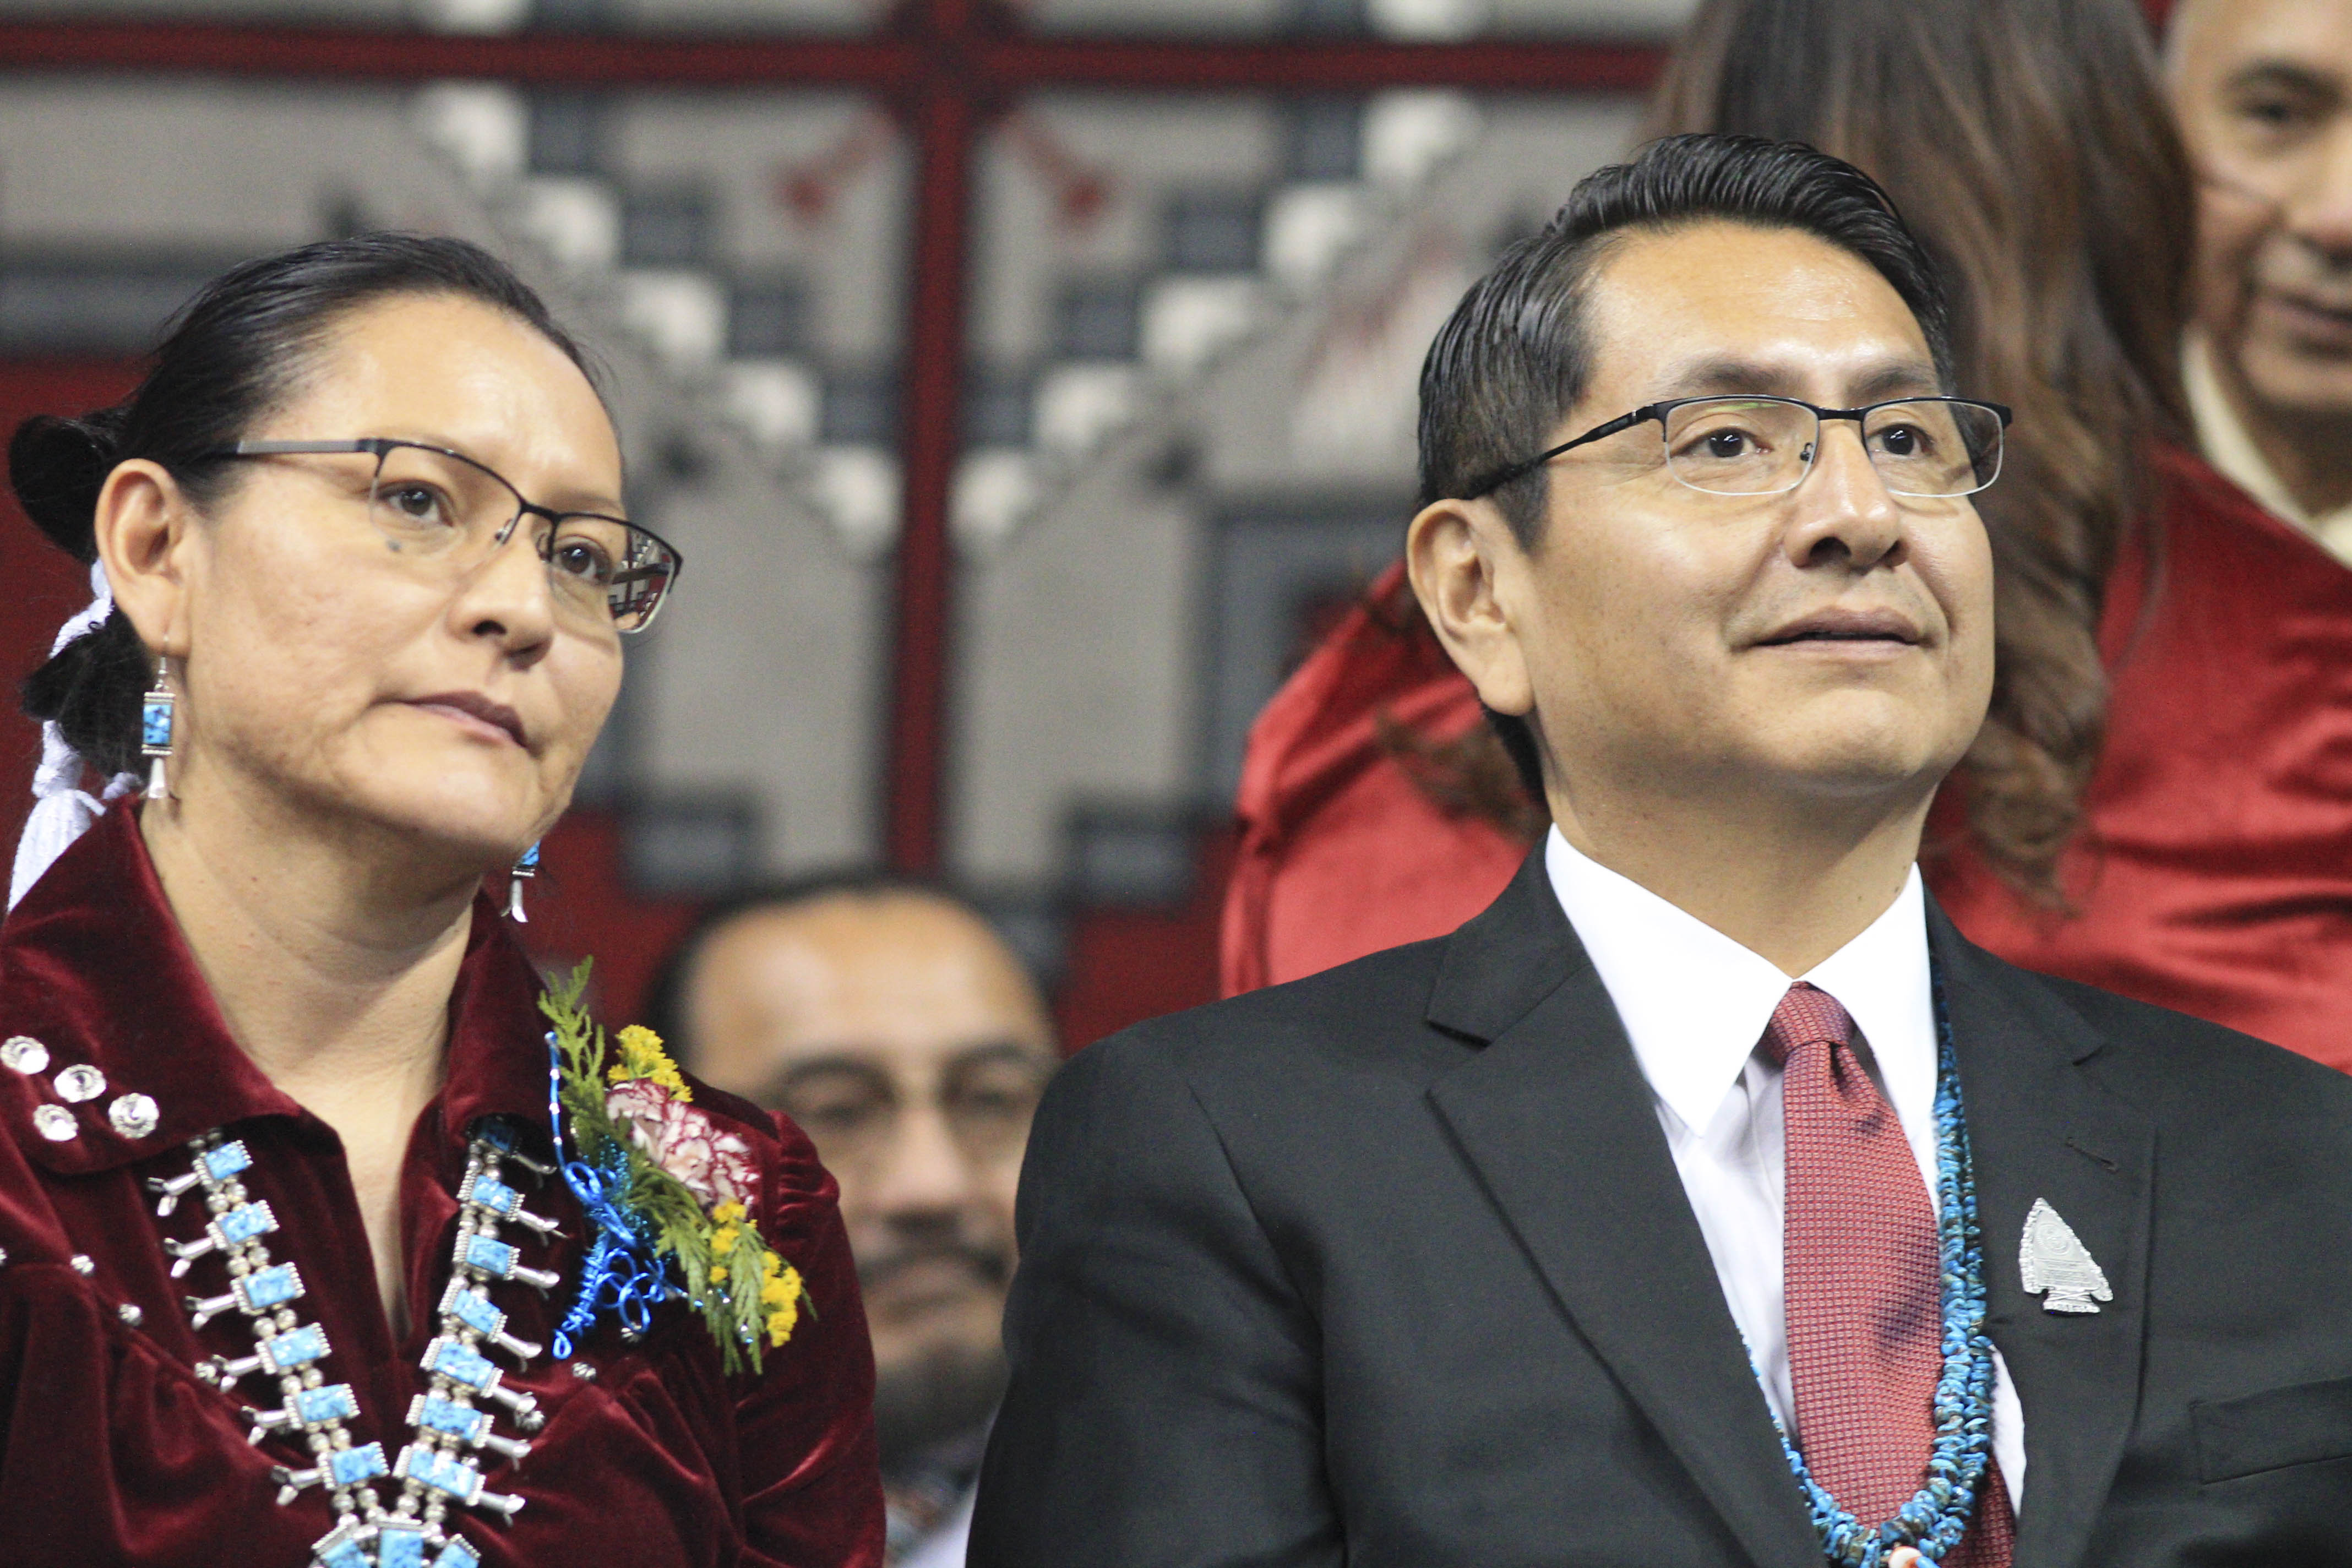 New Navajo Nation President sworn in, promises change, unity across